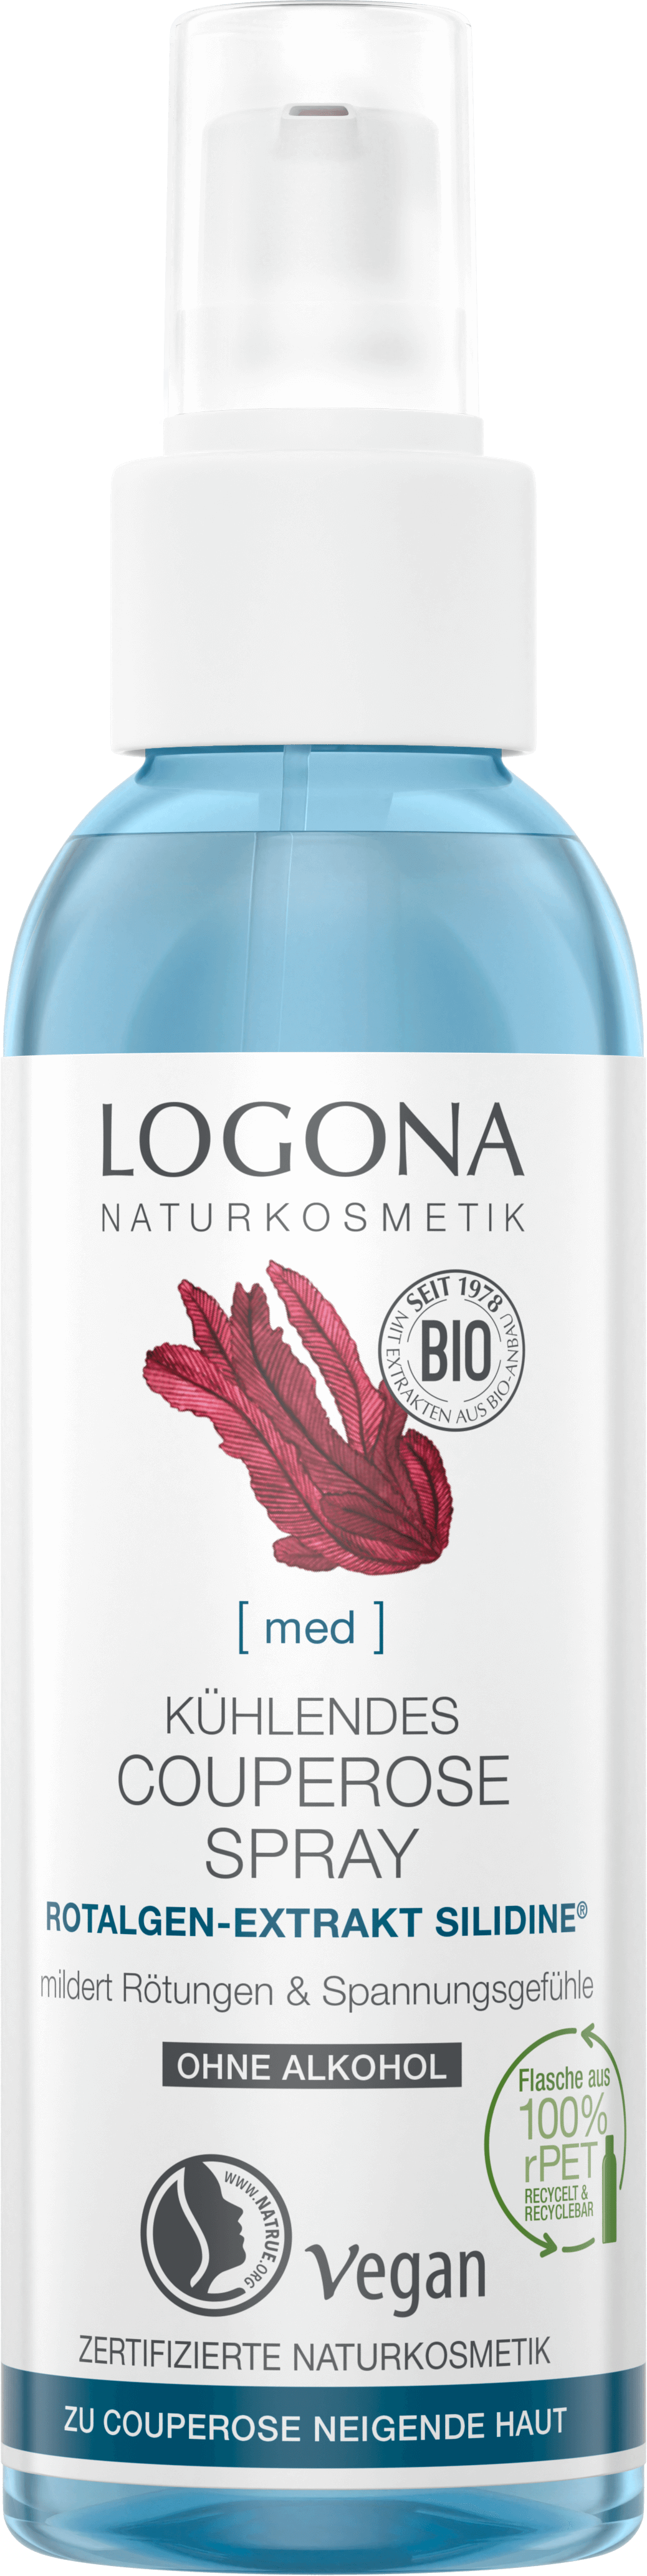 Kühlendes Couperose Spray | LOGONA Natural Cosmetics